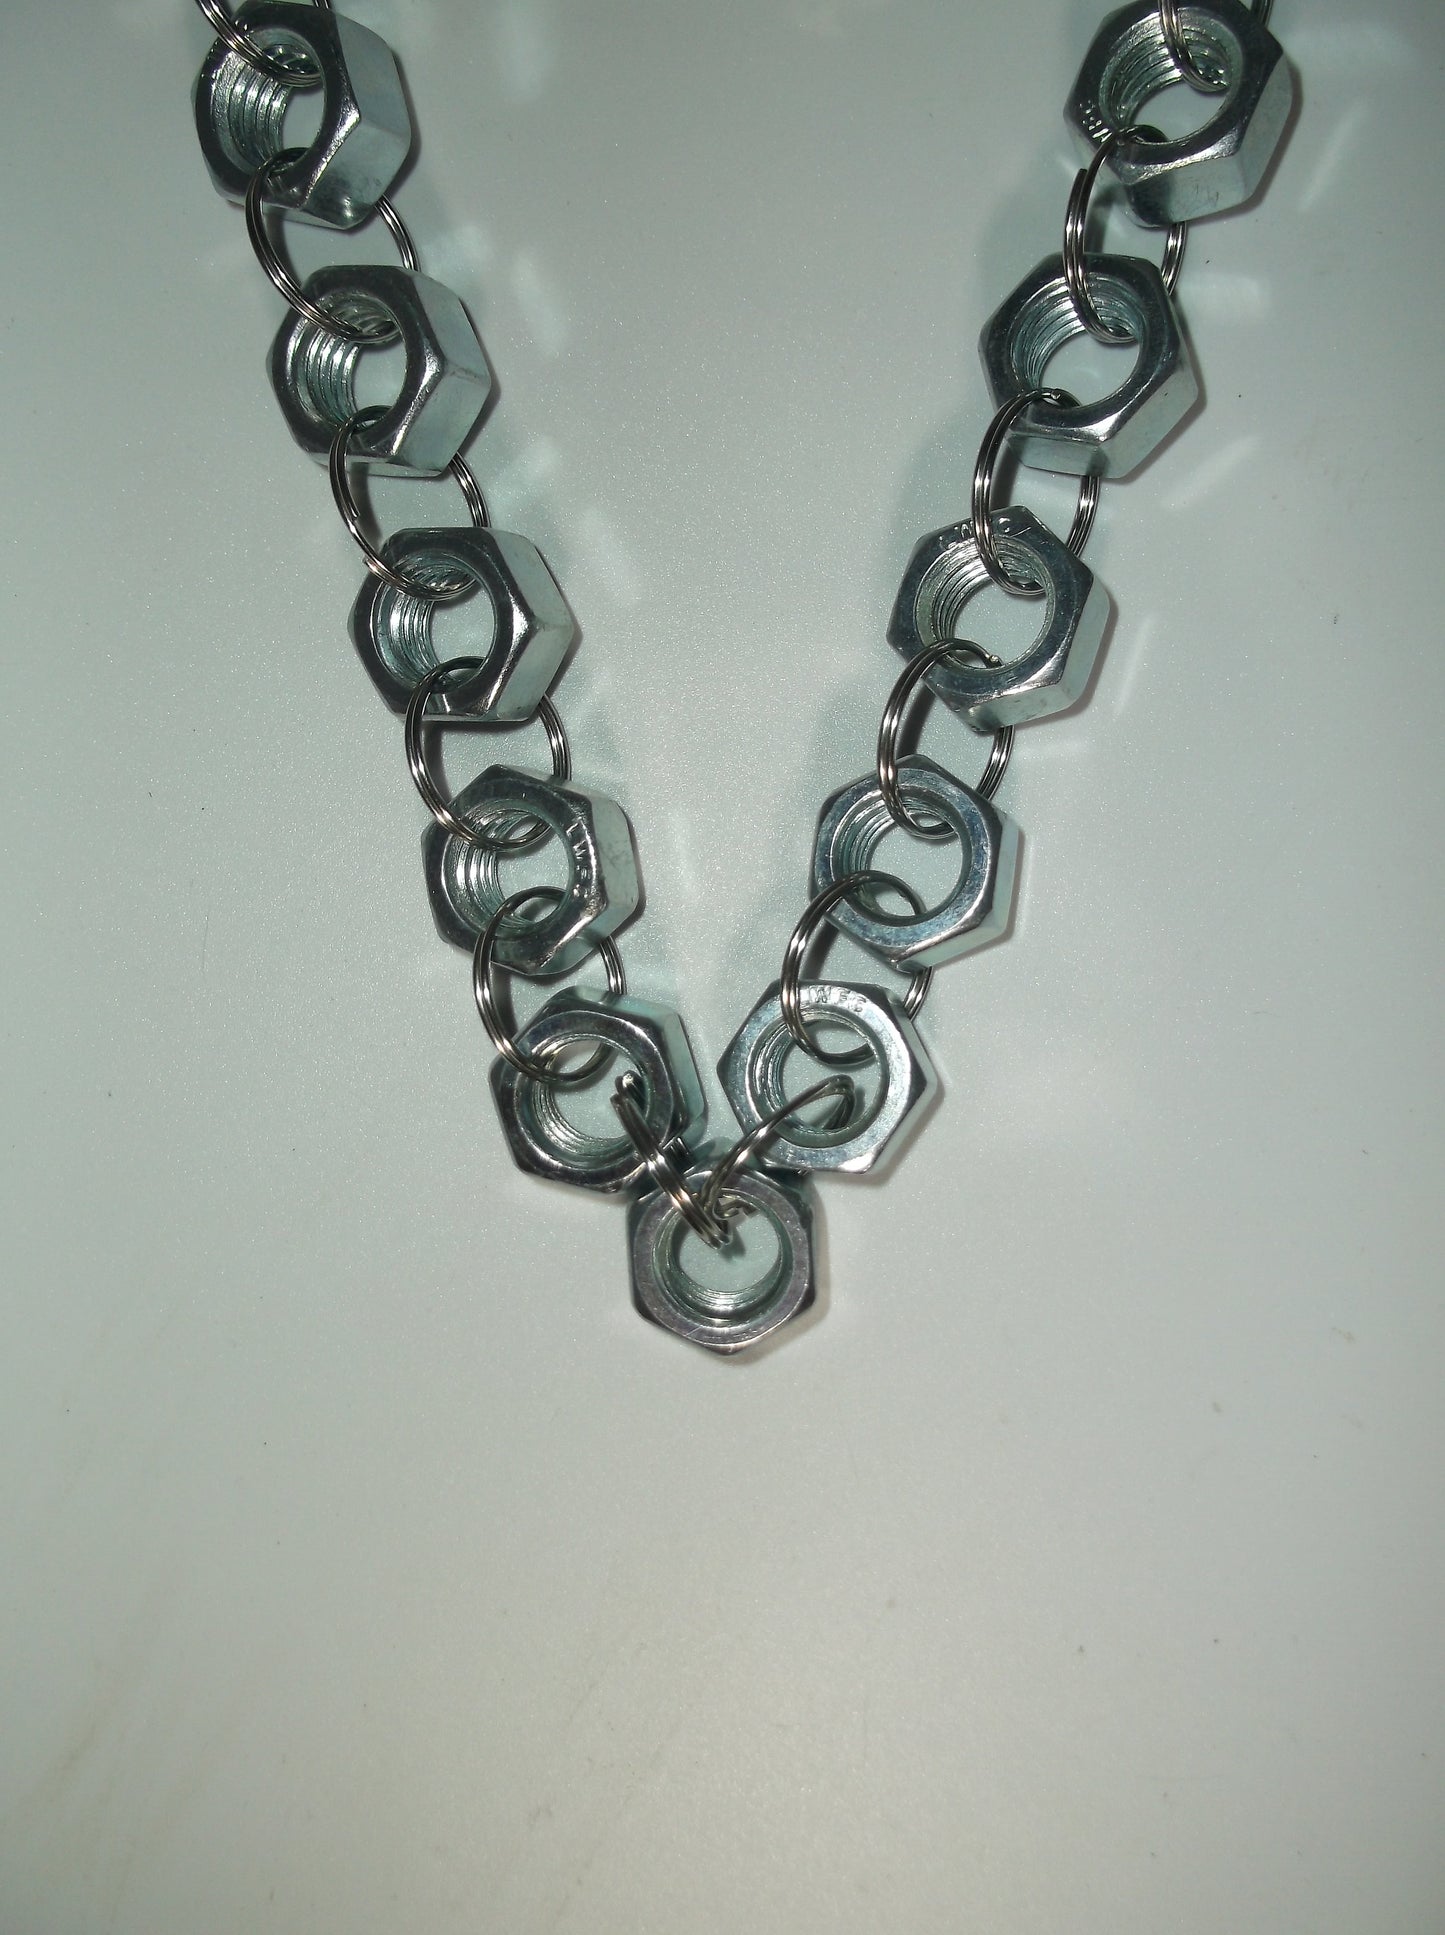 Nut Necklace, Crazy Nut Necklace, Zinc Plated Necklace, Up cycled handmade necklace